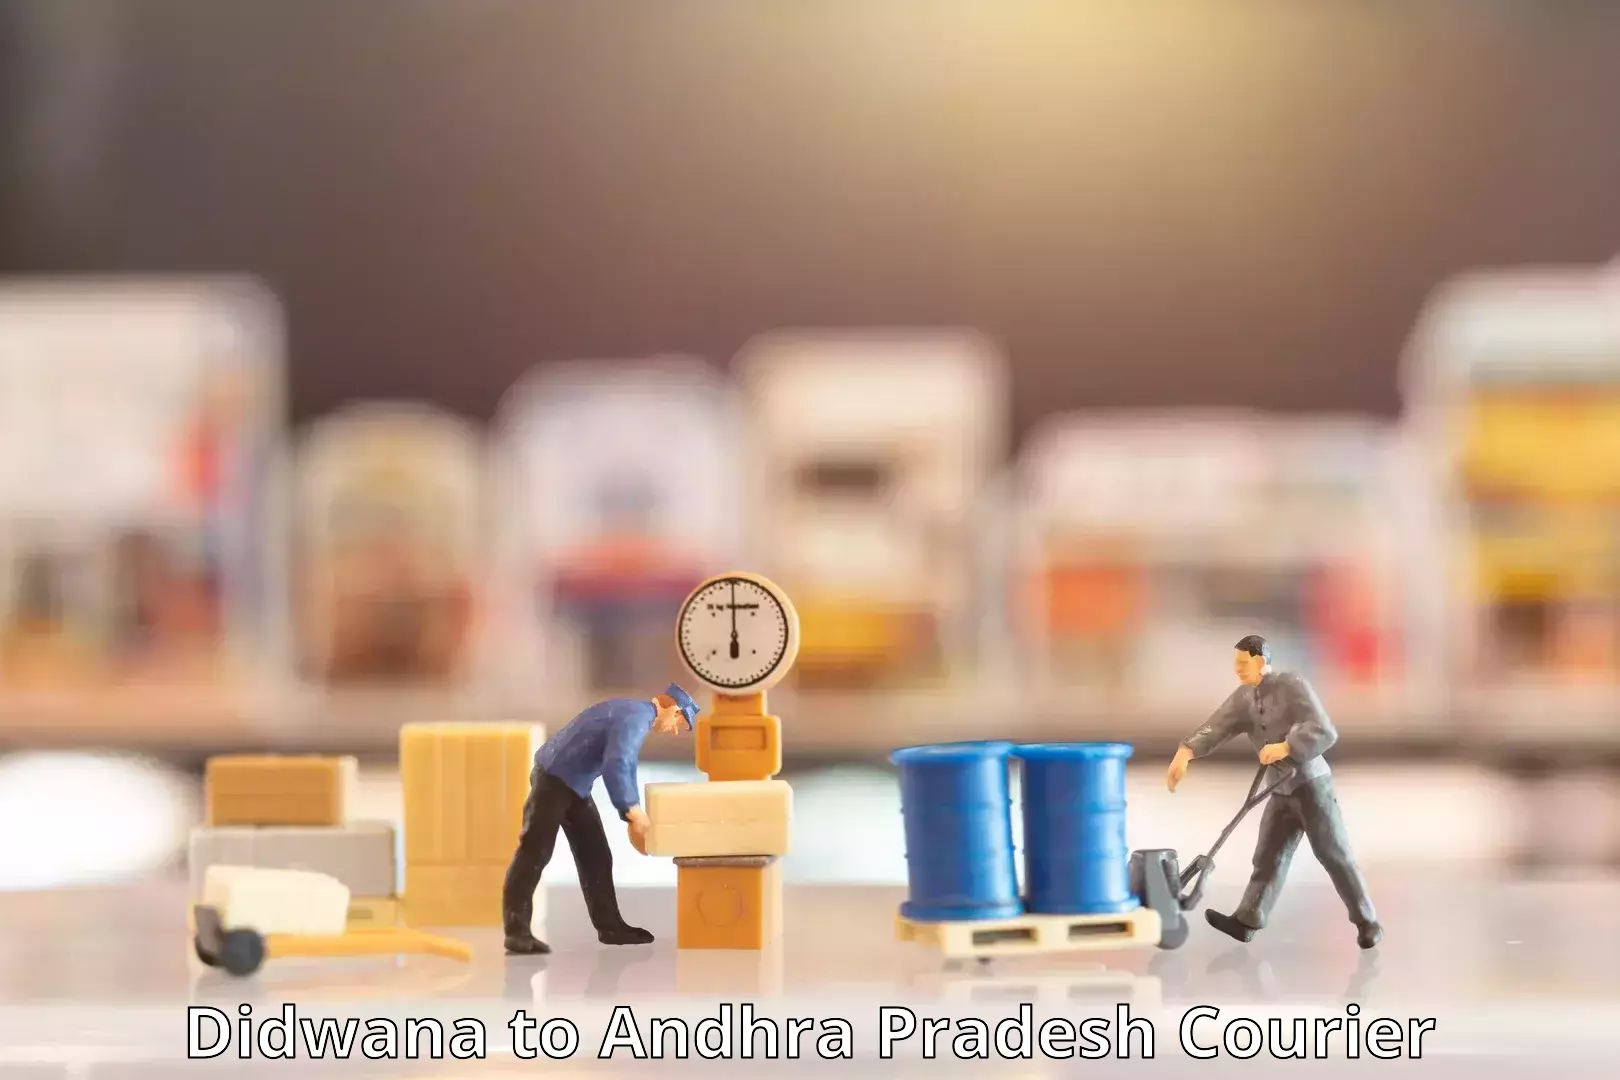 Courier service comparison Didwana to Andhra Pradesh